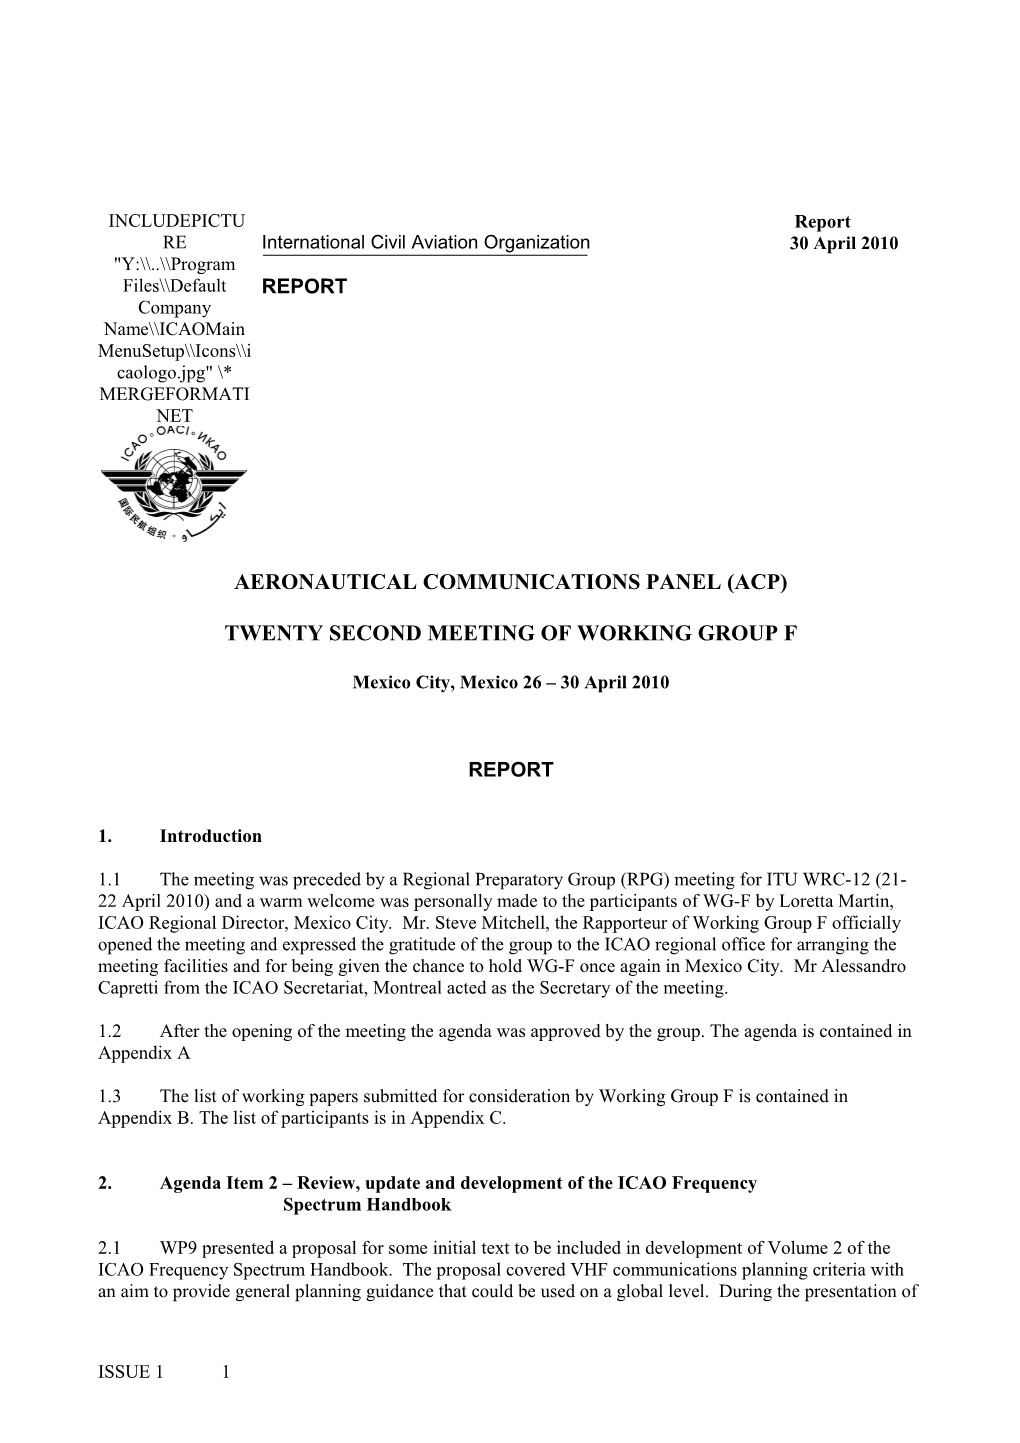 Aeronautical Communications Panel (Acp) s1